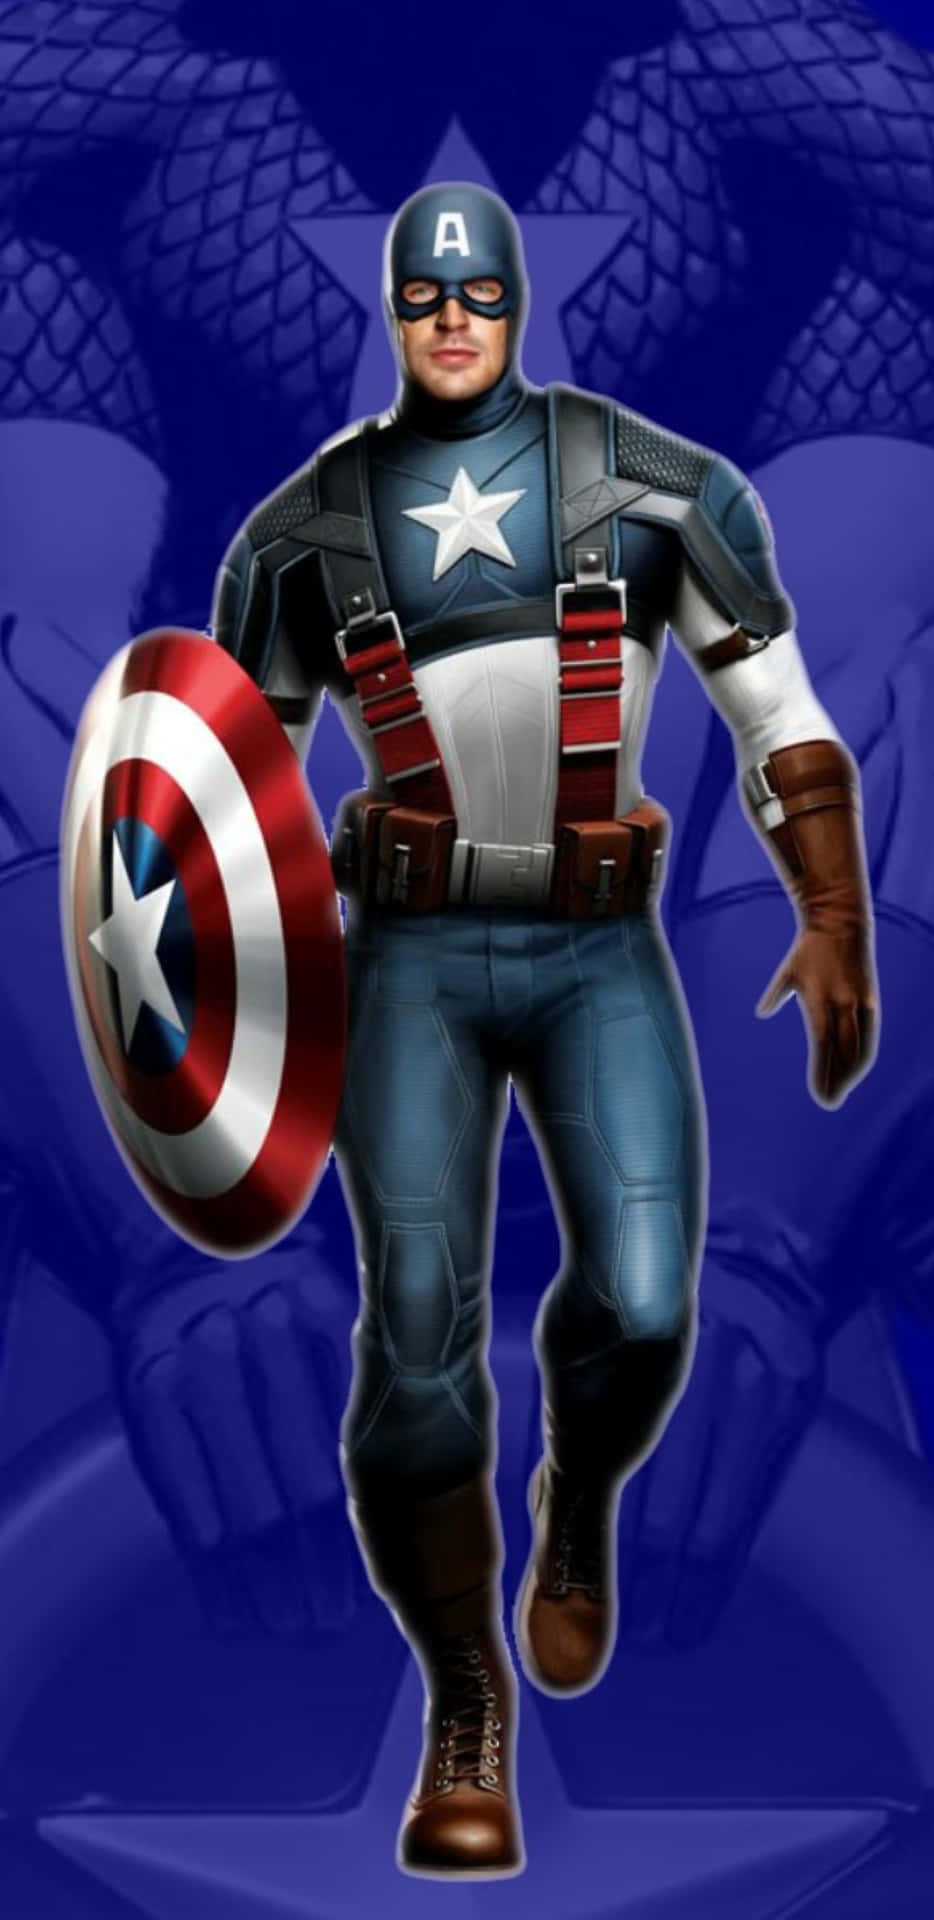 Pixel3xl Bakgrundsbild Med Captain America Illustration Konst.